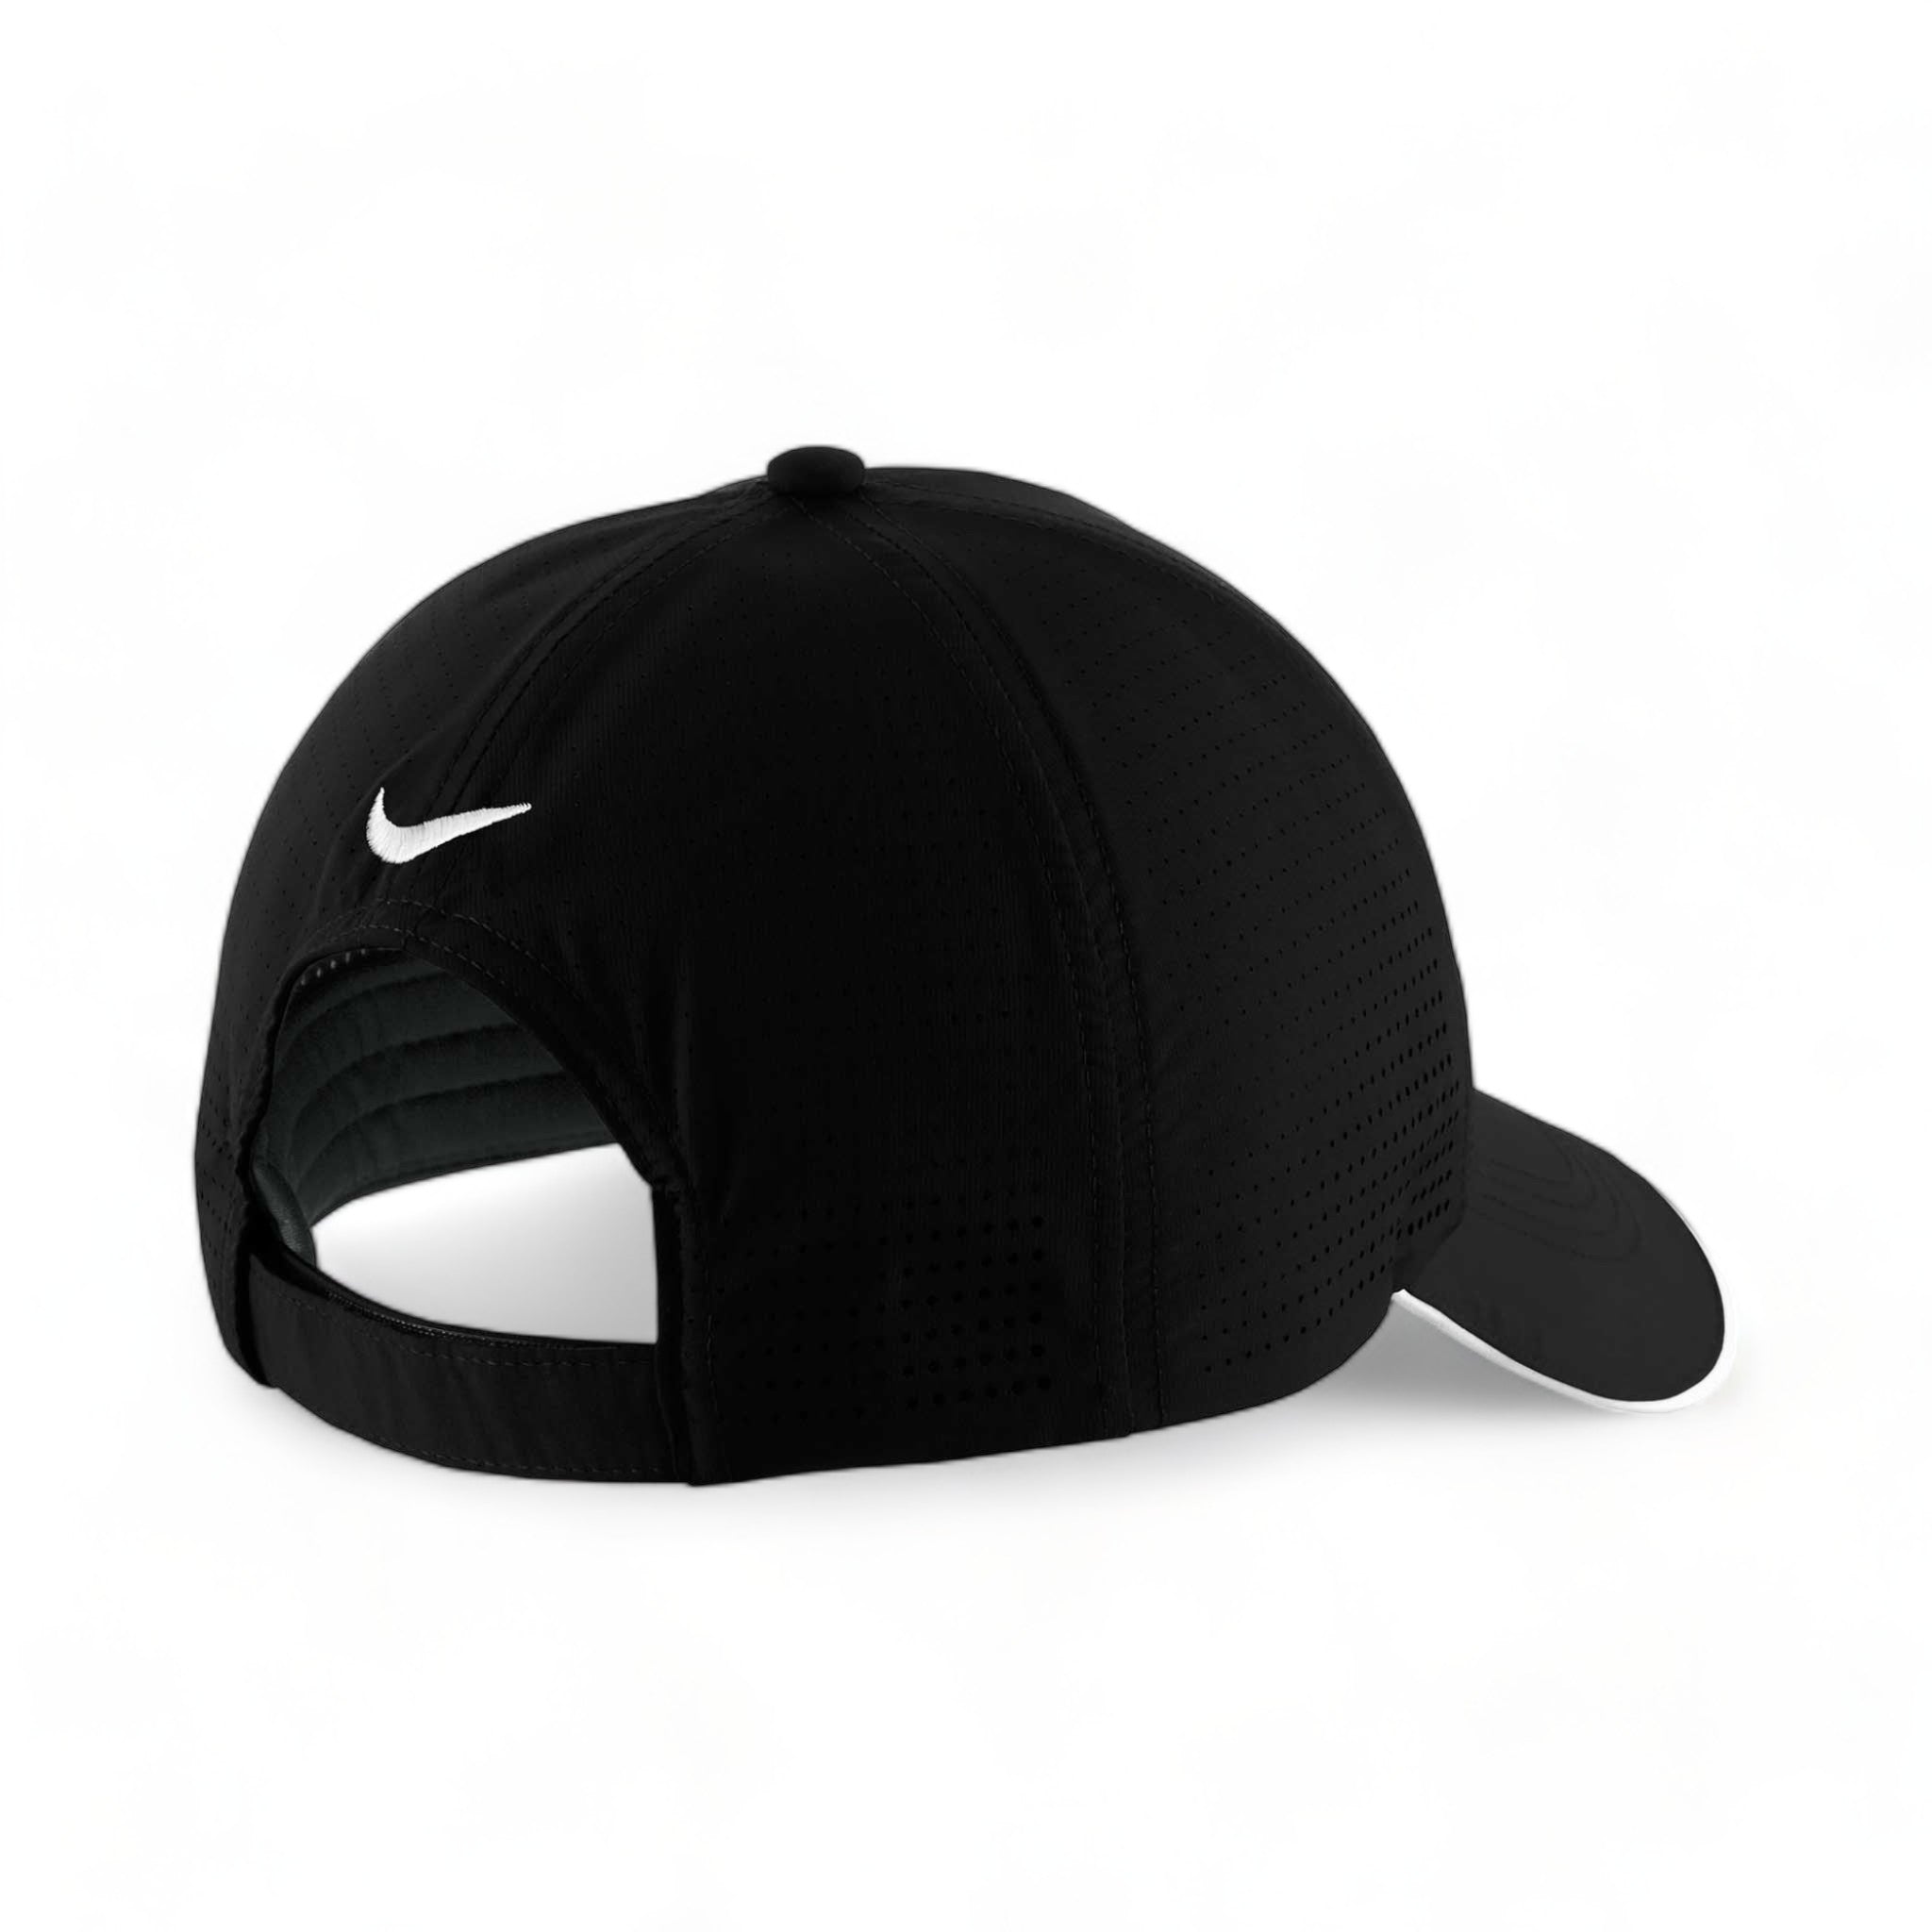 Back view of Nike NKFB6445 custom hat in black and white